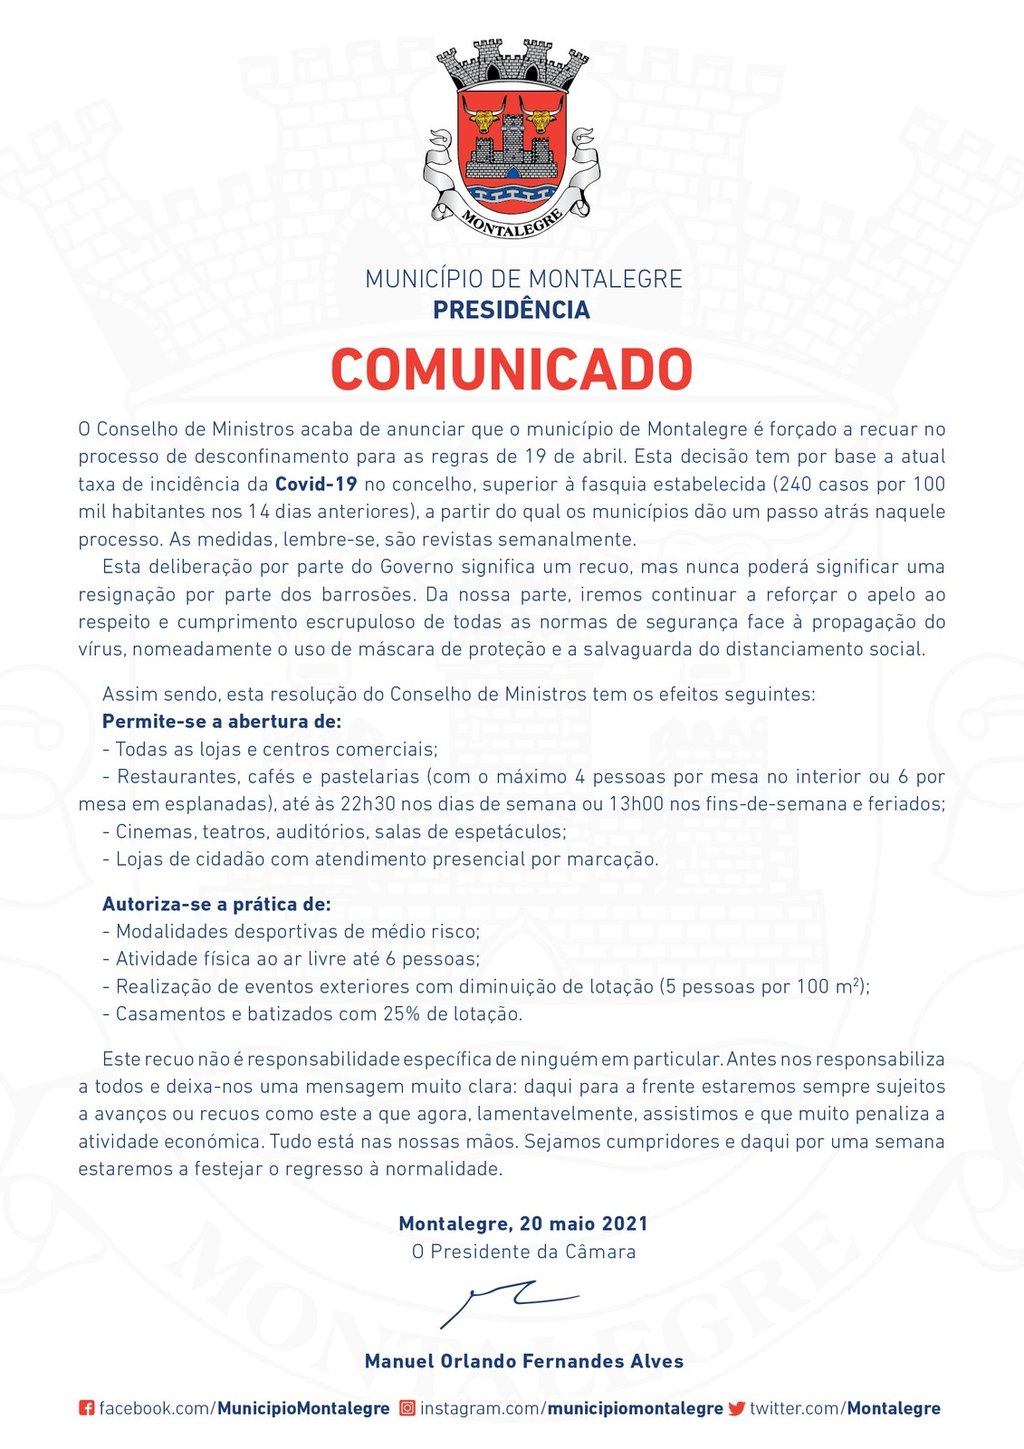 Municipio de montalegre   presidencia   comunicado  20 maio 2021  1 1024 2500